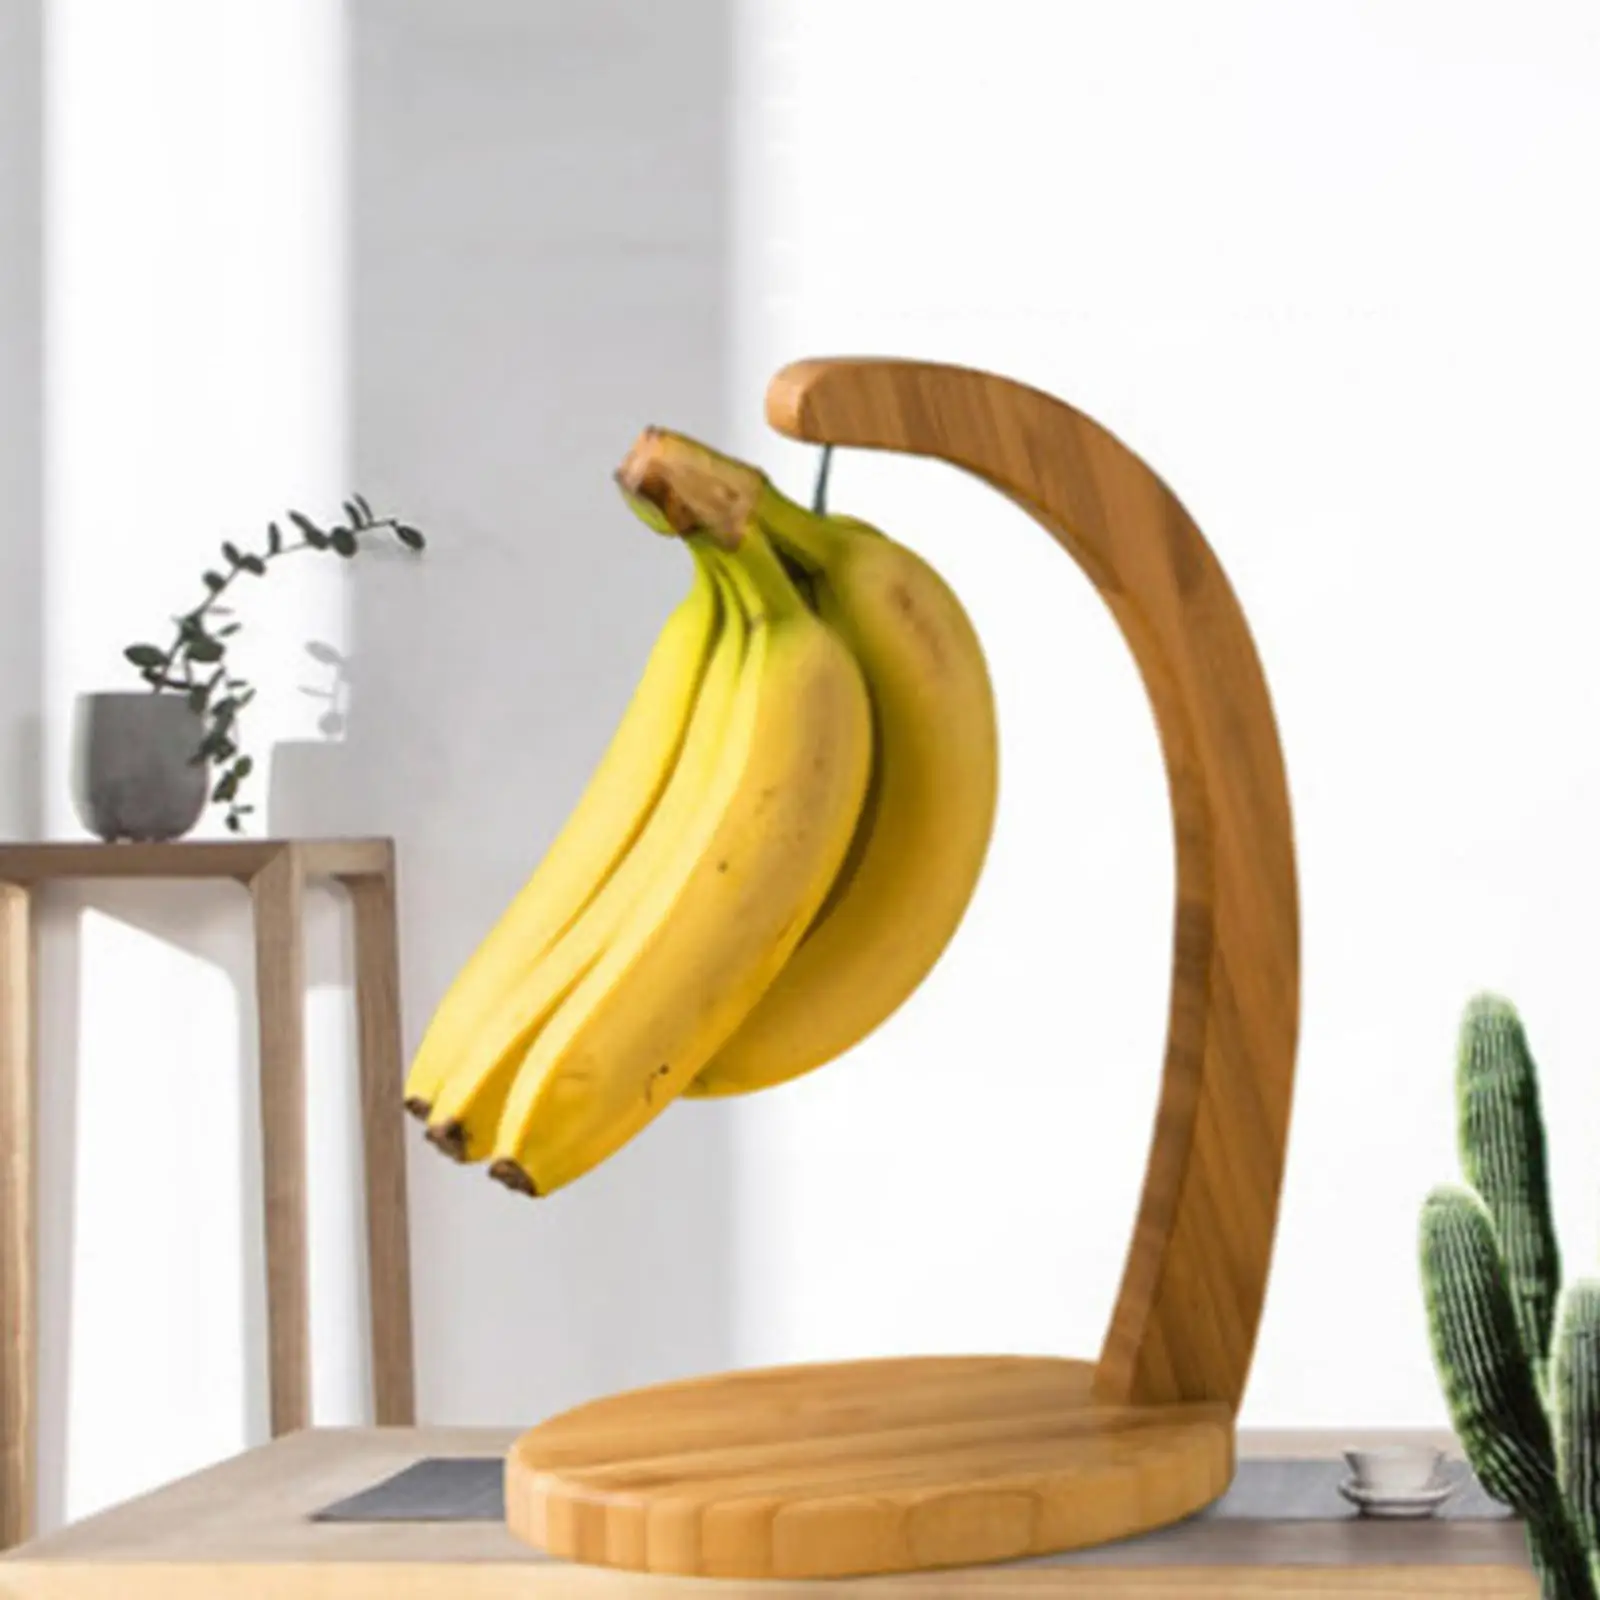 Banana Hanger for Kitchen Countertop, Kitcken Organizer- Bamboo Wood and Rust Resistance Metal Hook